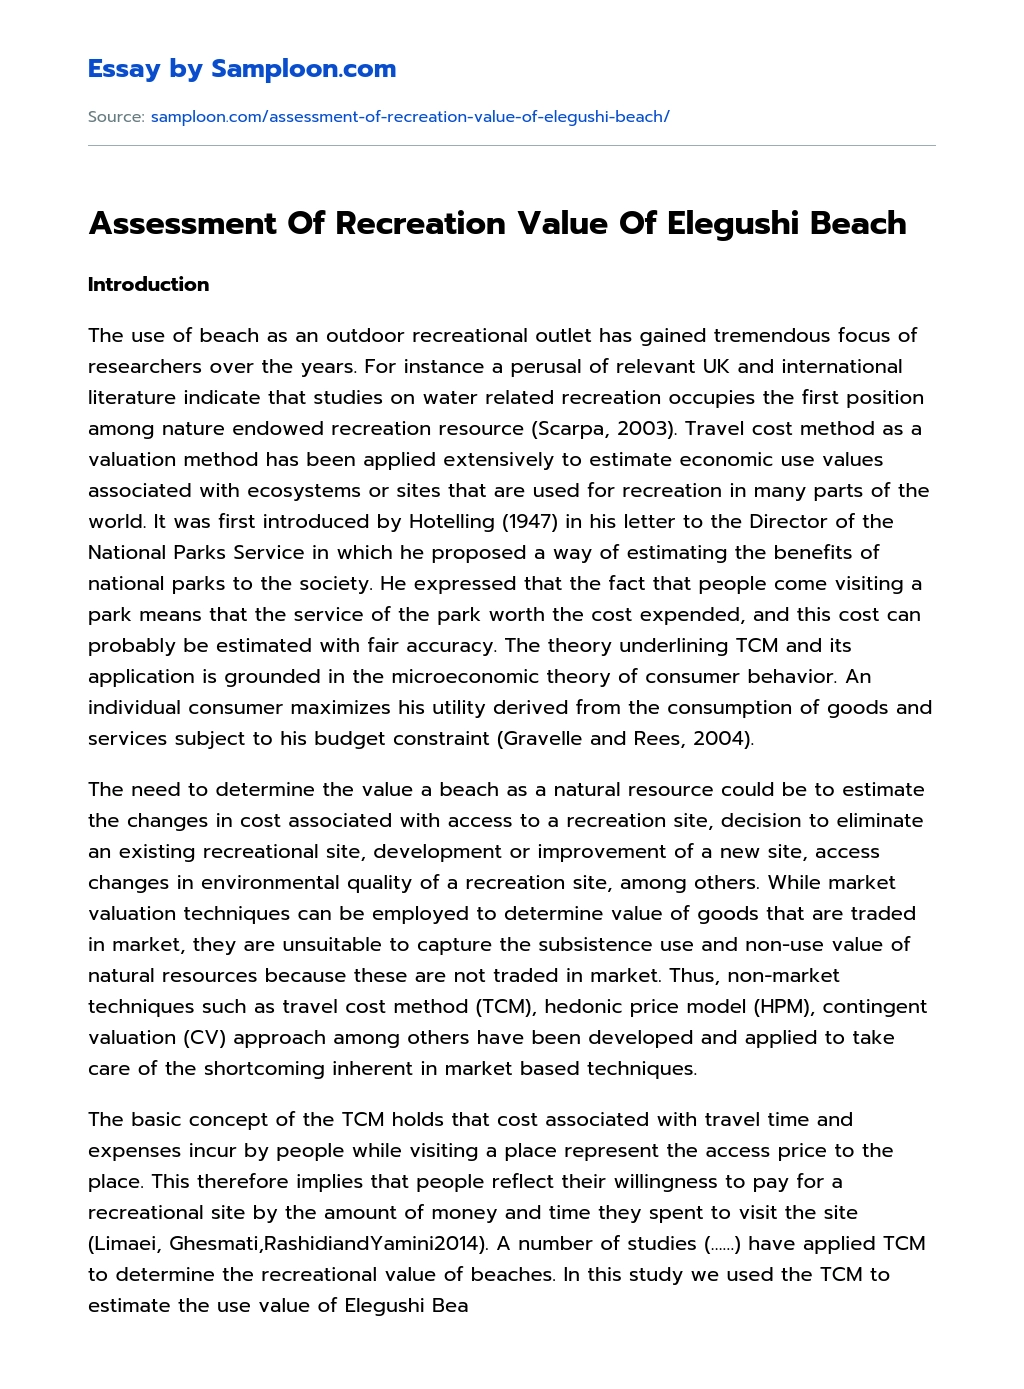 Assessment Of Recreation Value Of Elegushi Beach essay